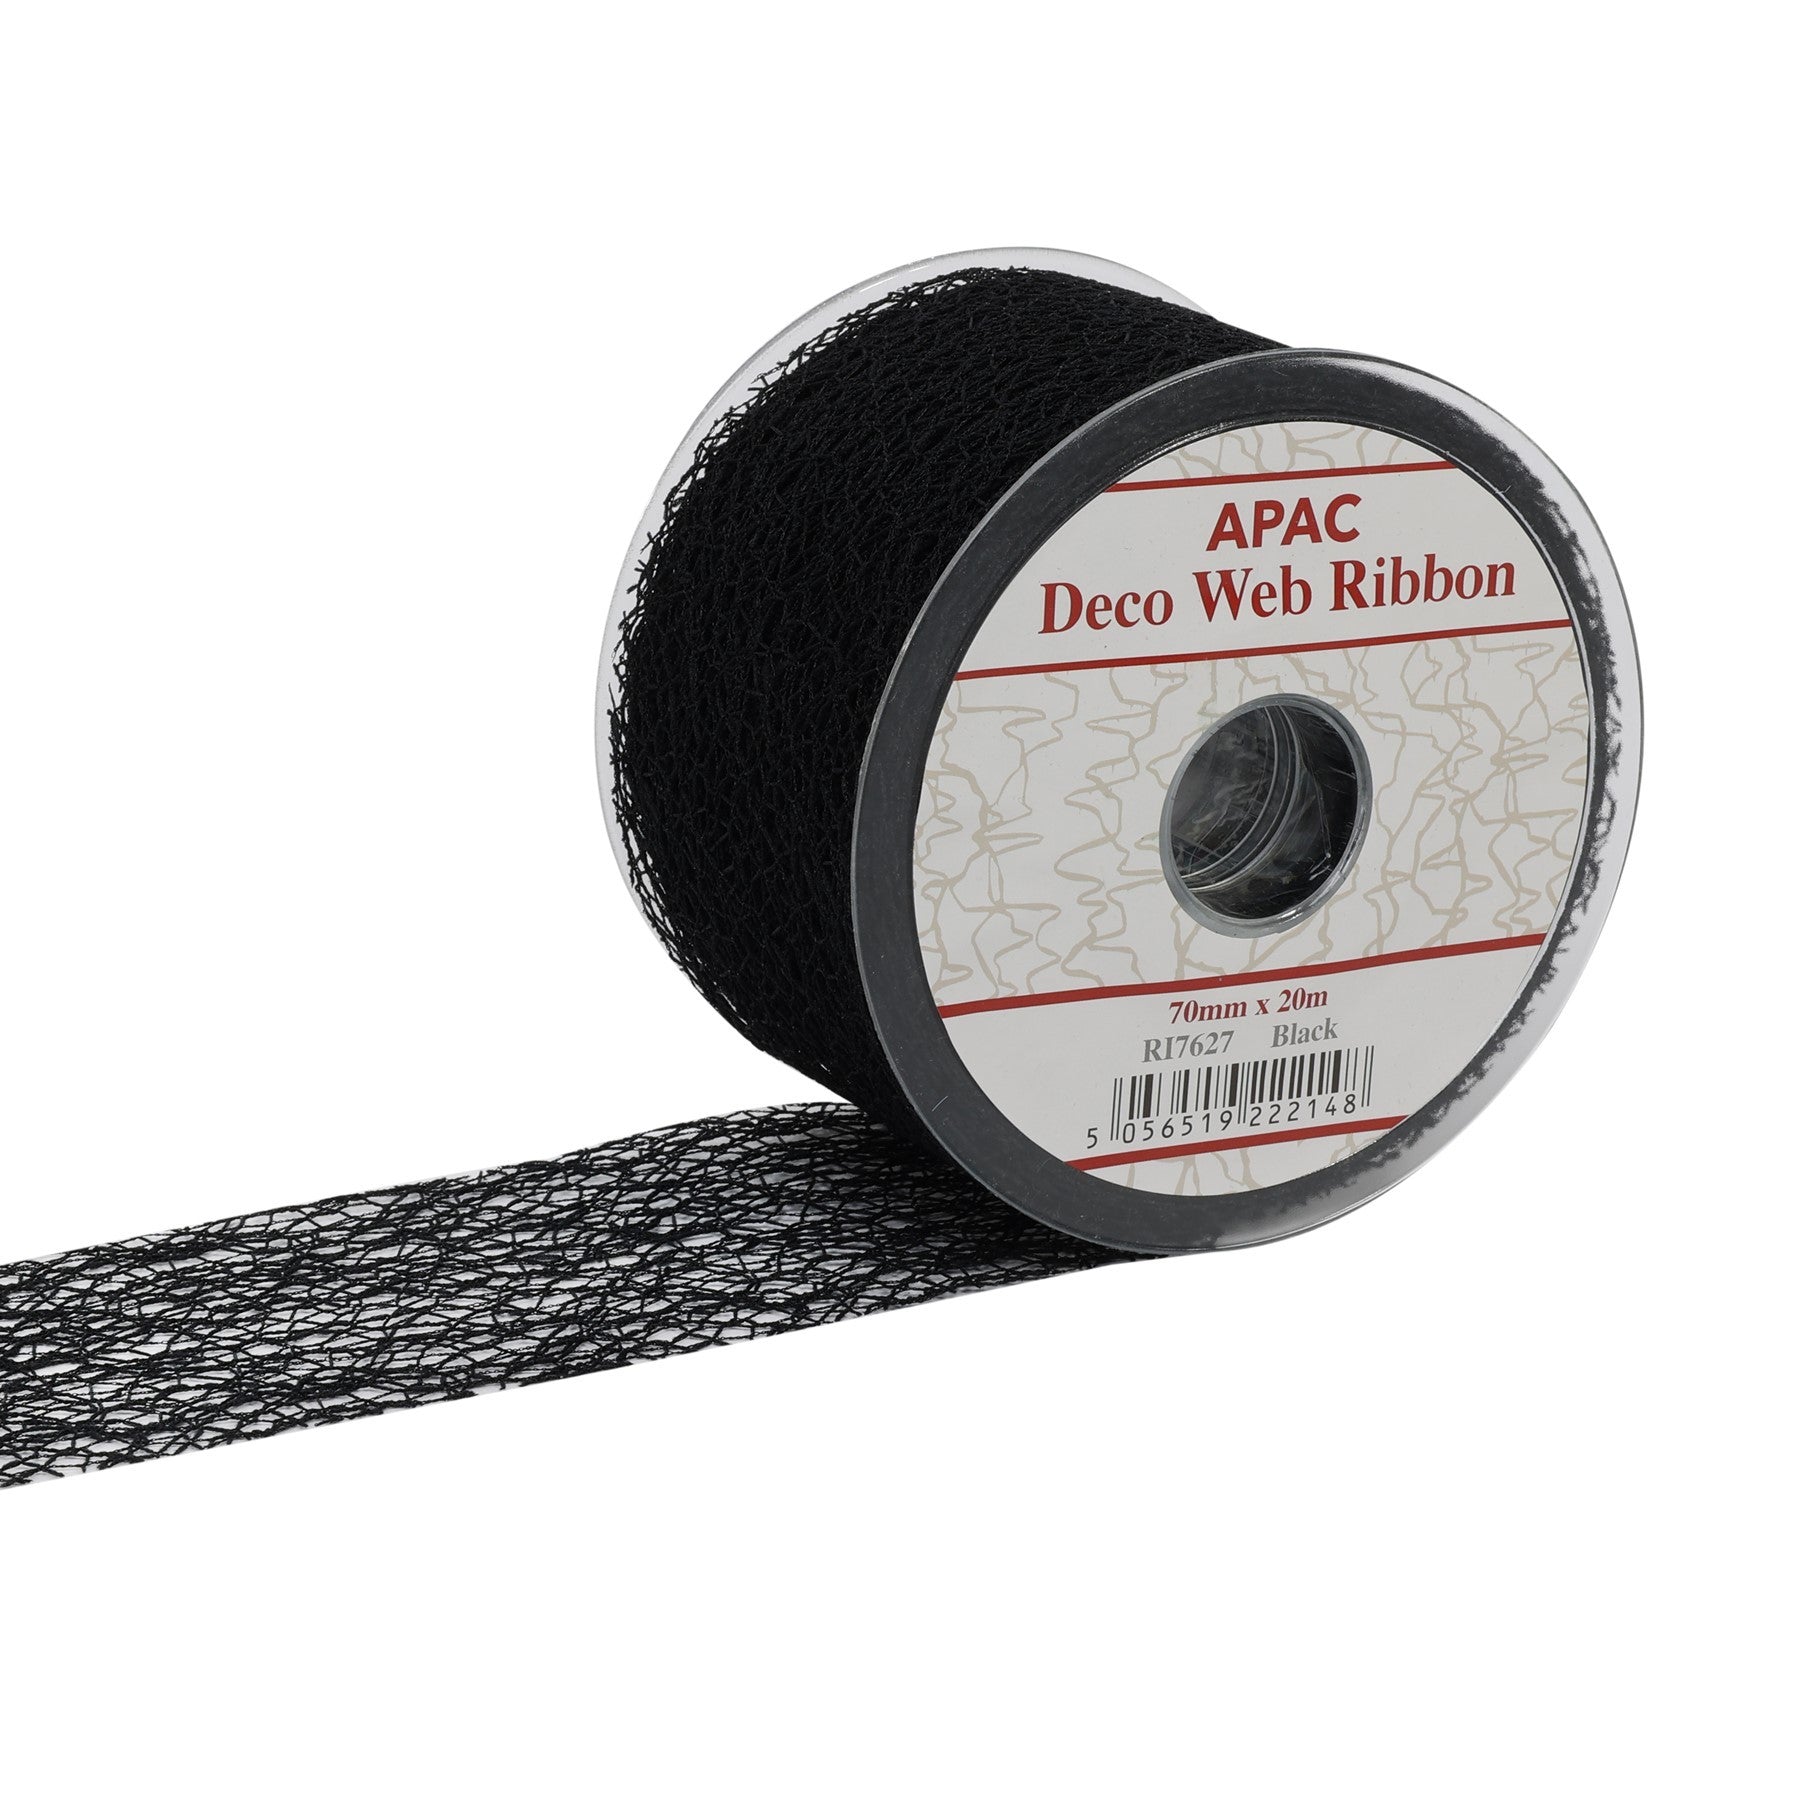 Black Deco Web Ribbon (70mm x 20m)